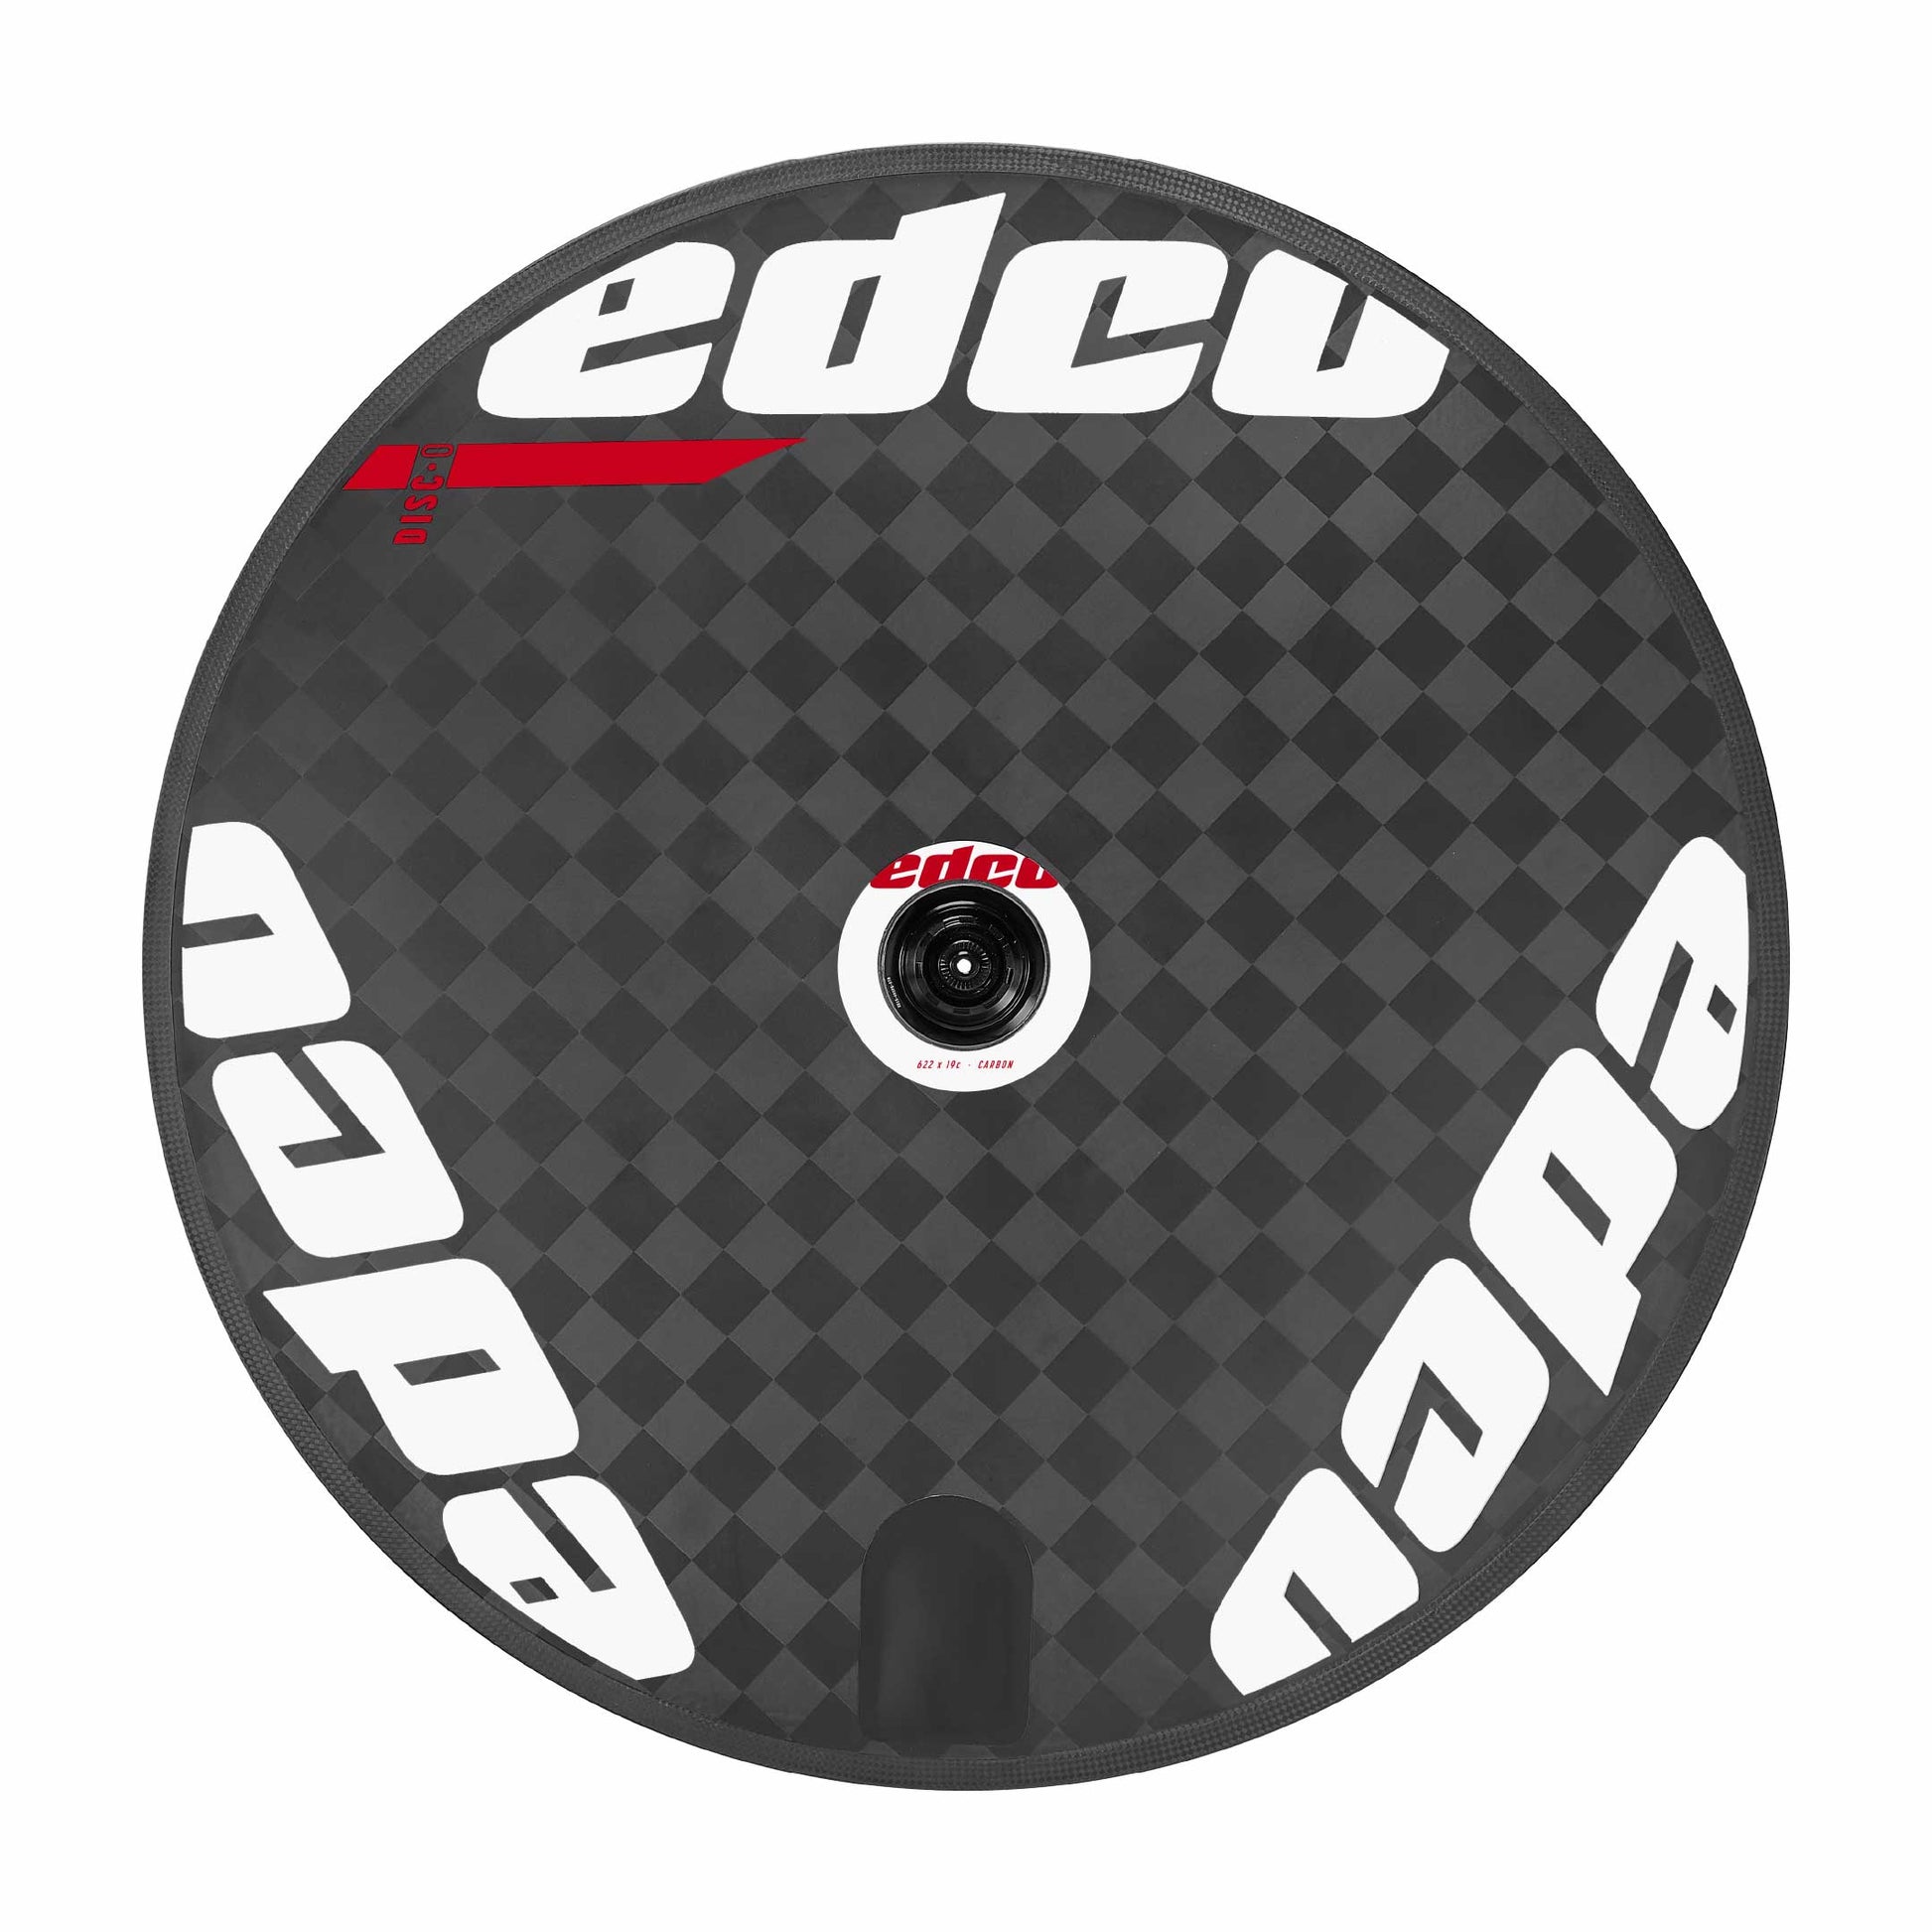 Full disc rear wheel, rim brake, triathlon or timetrail wheel, red white logos